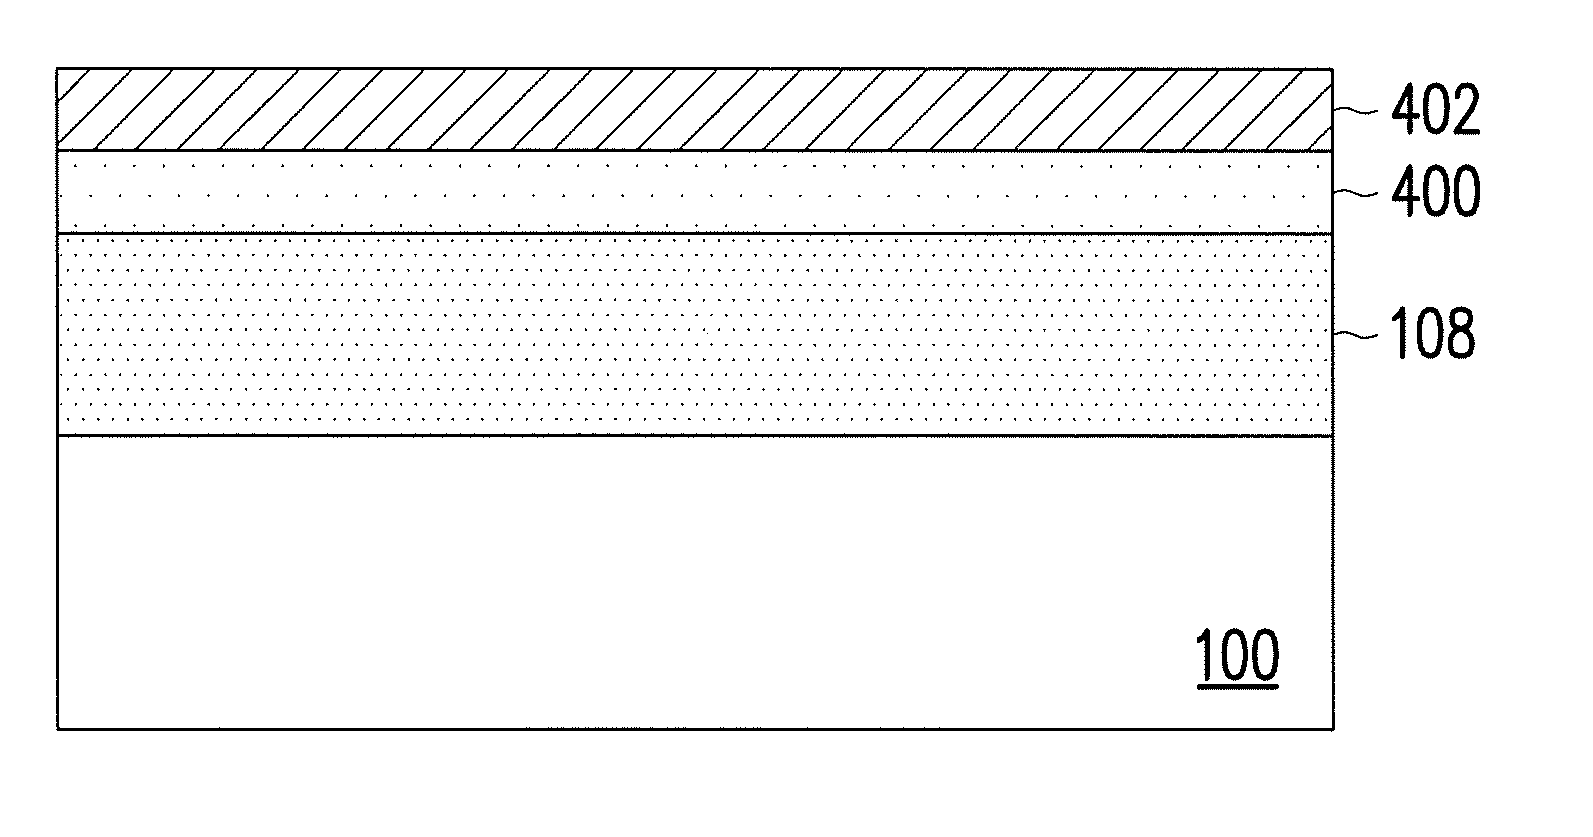 Method of fabricating perovskite solar cell